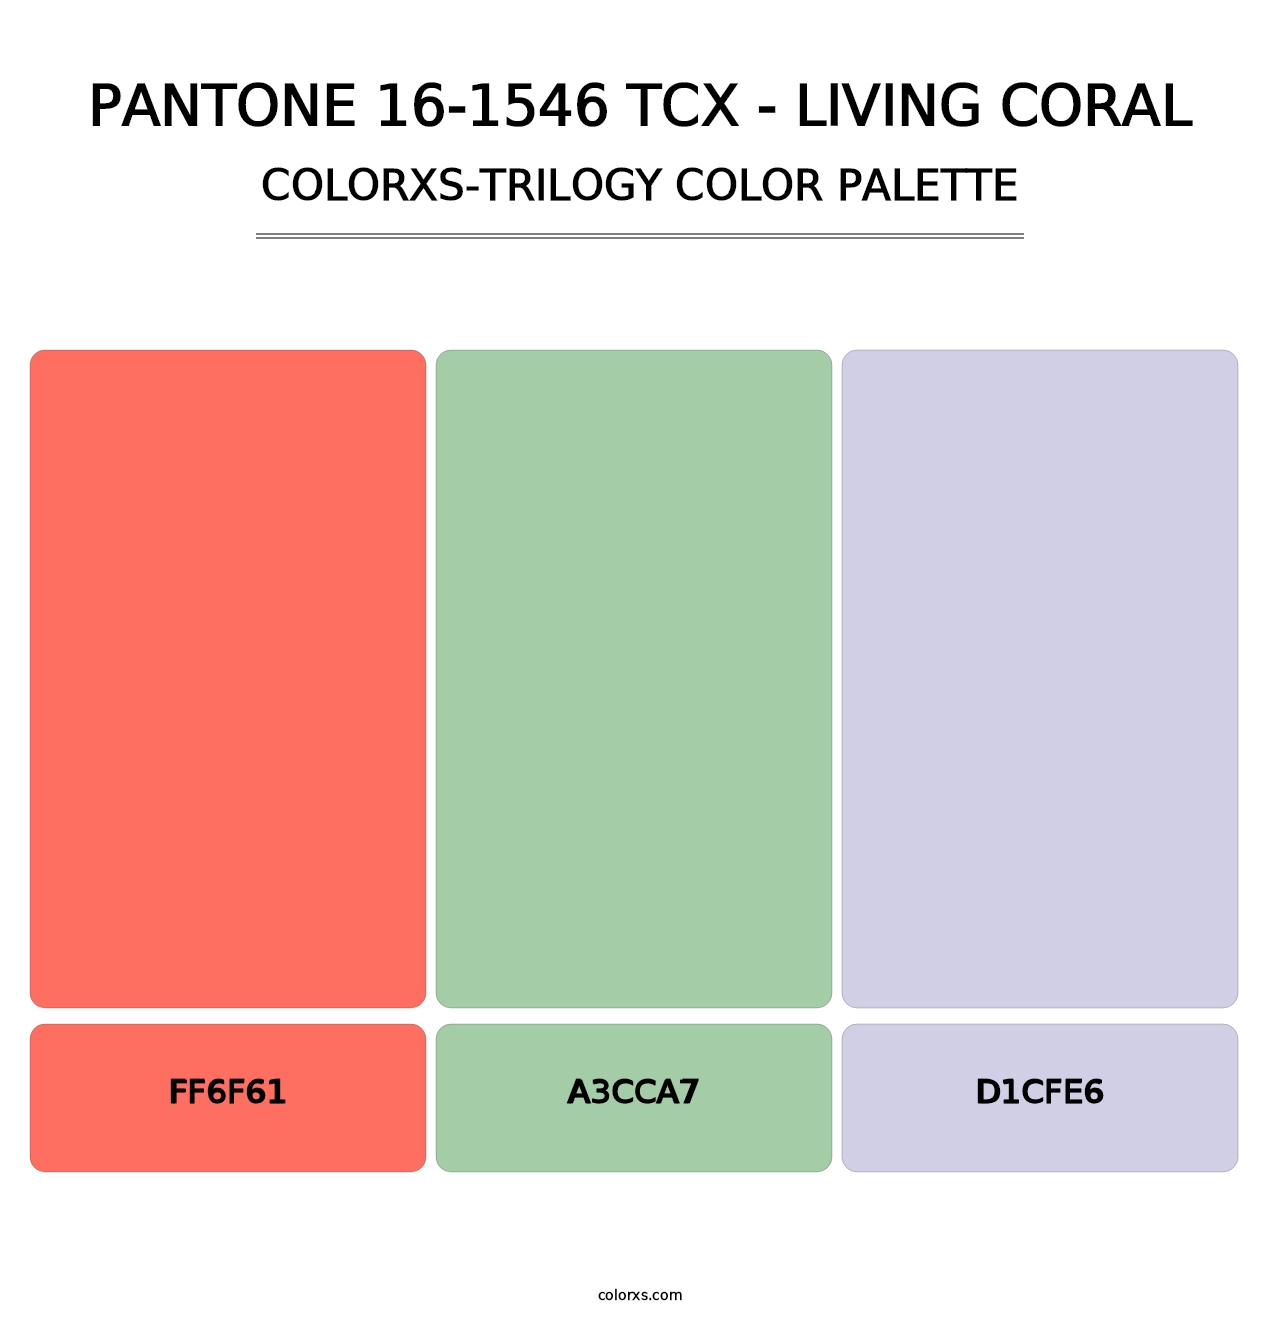 PANTONE 16-1546 TCX - Living Coral - Colorxs Trilogy Palette